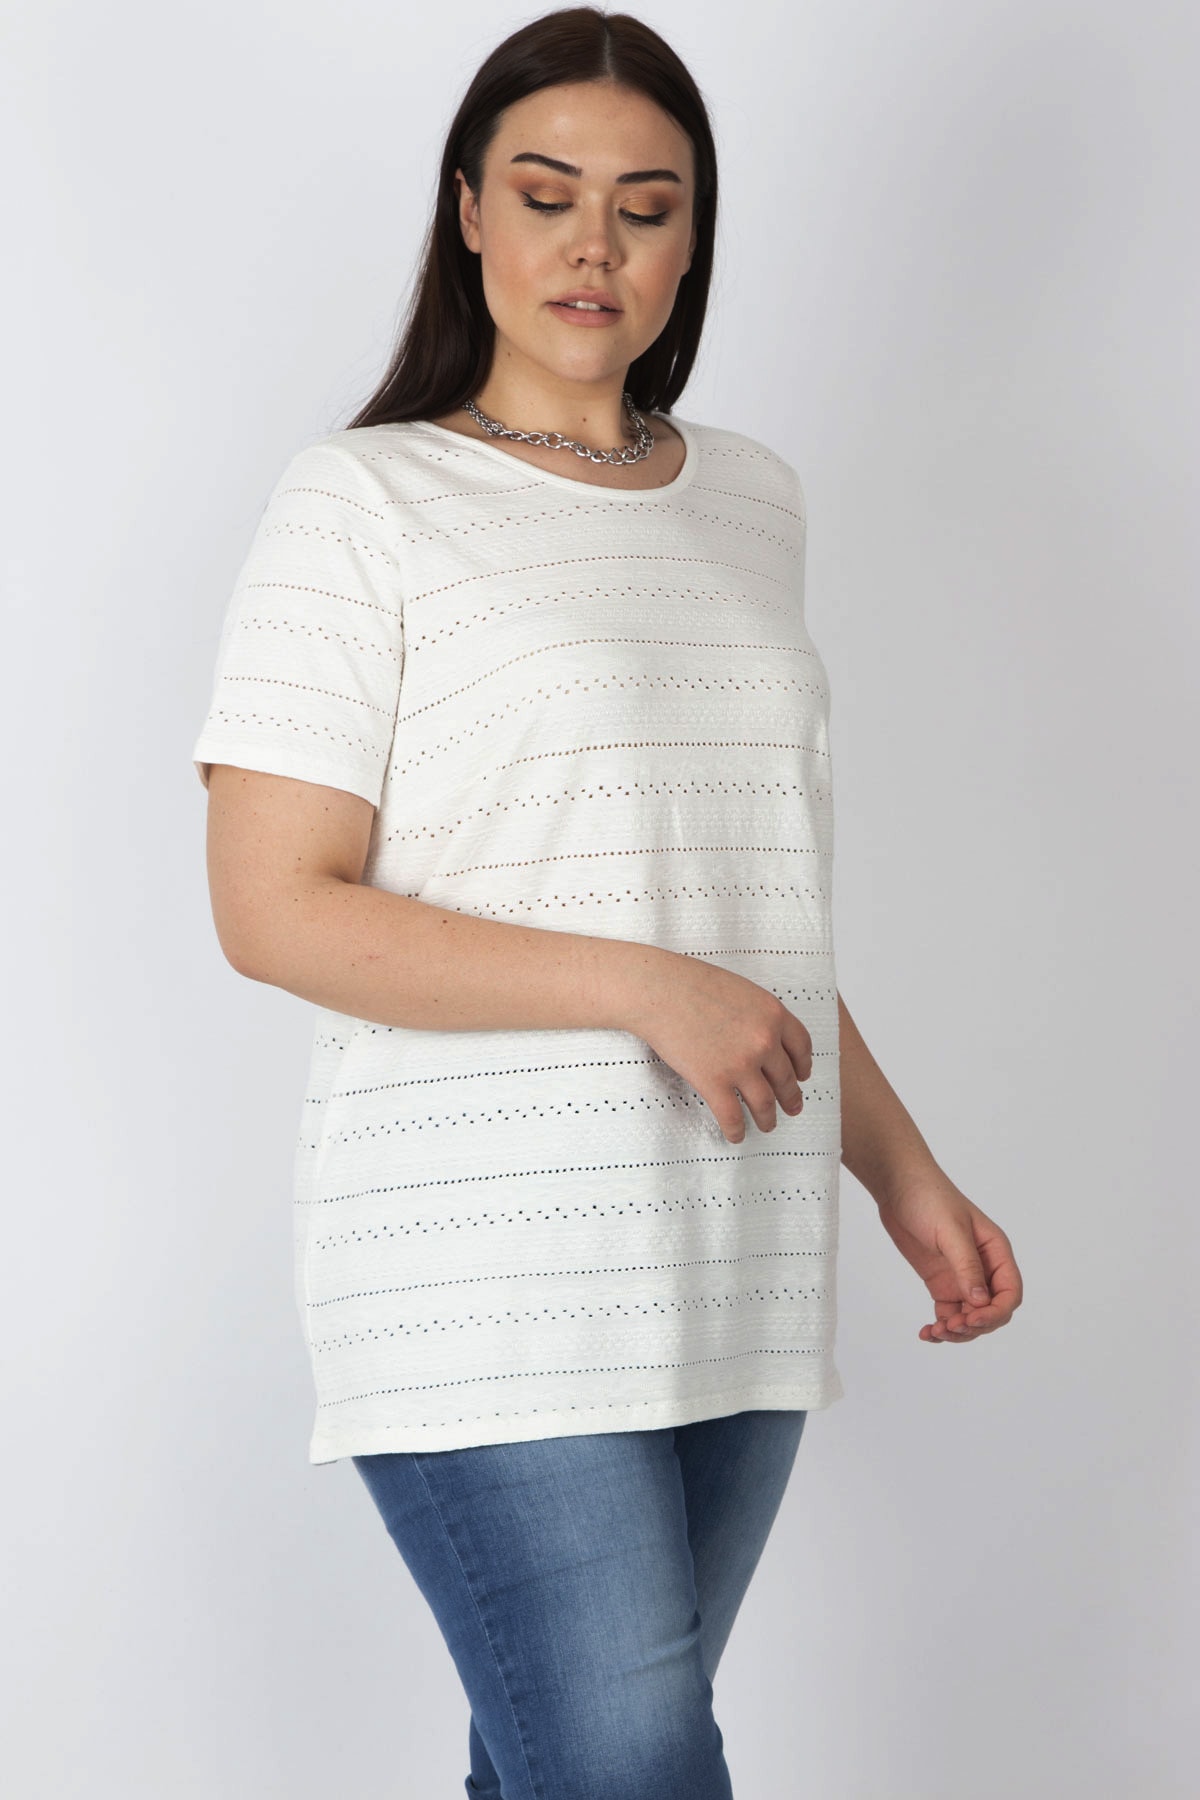 Şans Women's Large Size Bone Cotton Fabric Self-Patterned Openwork Woven Blouse